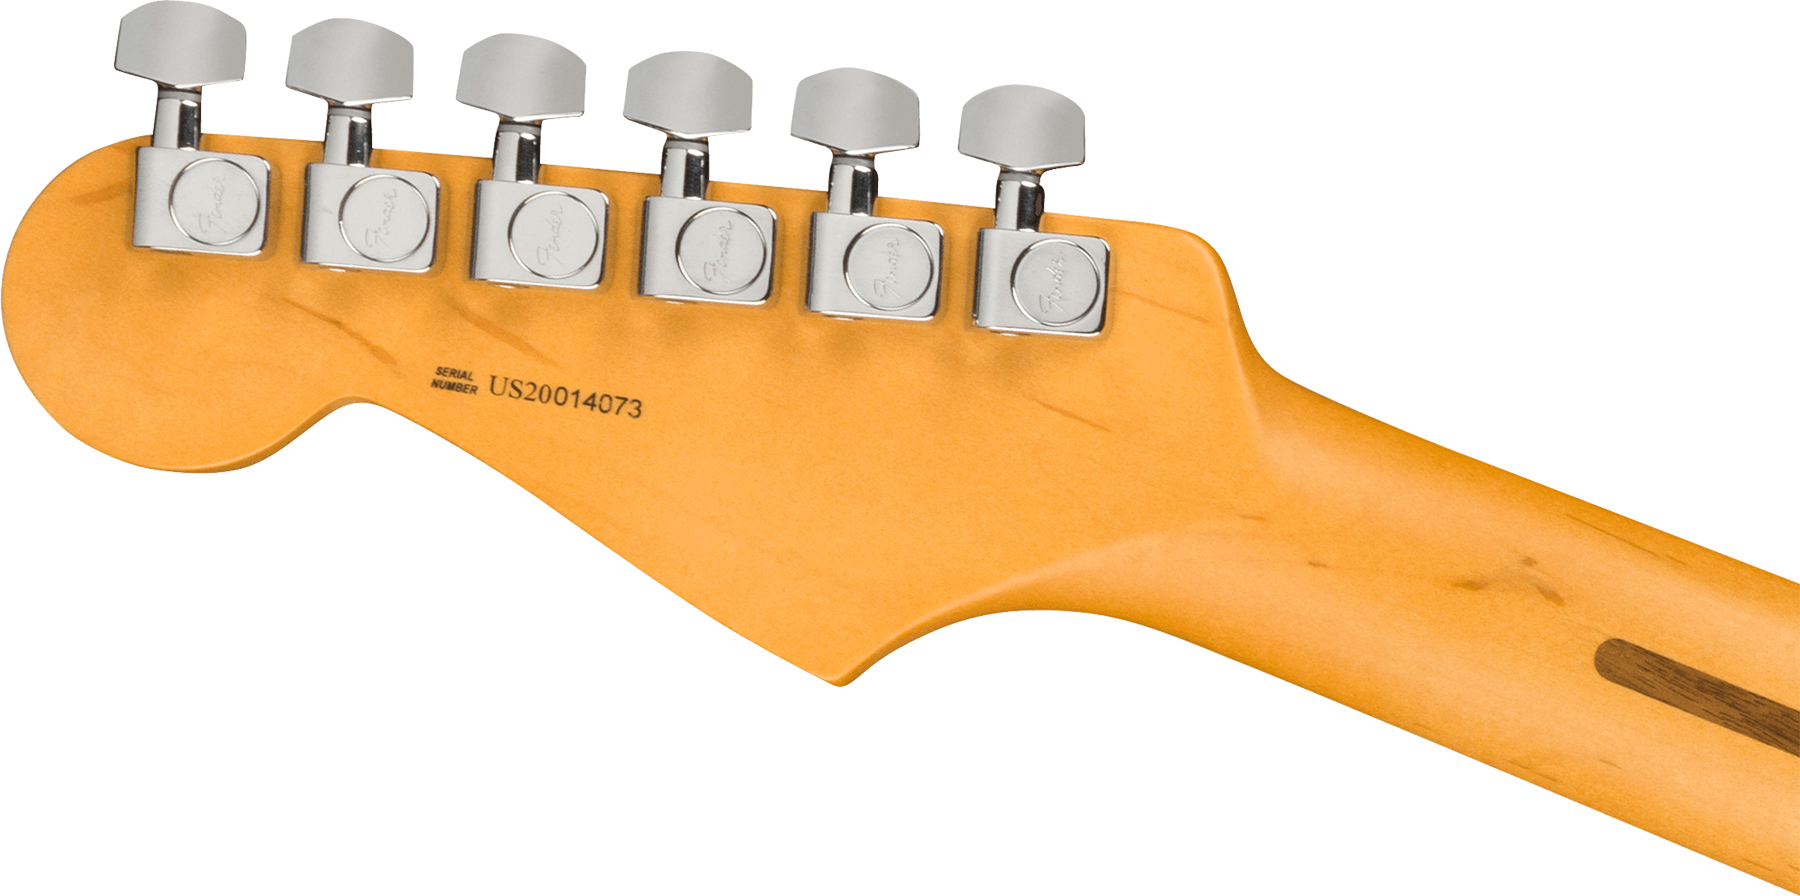 Fender Strat American Professional Ii Usa Mn - Black - Str shape electric guitar - Variation 3